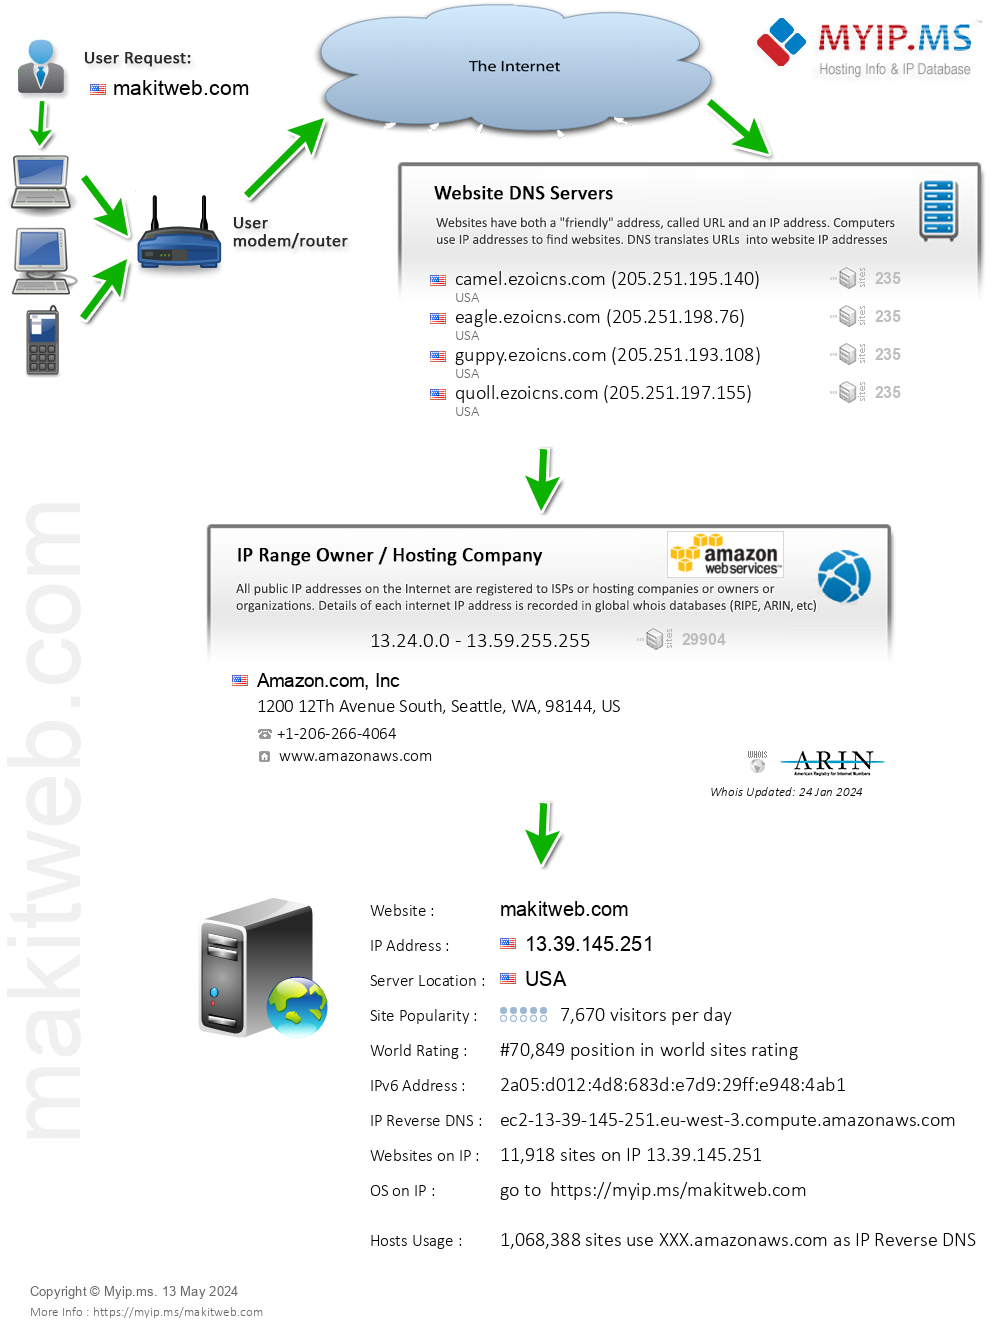 Makitweb.com - Website Hosting Visual IP Diagram